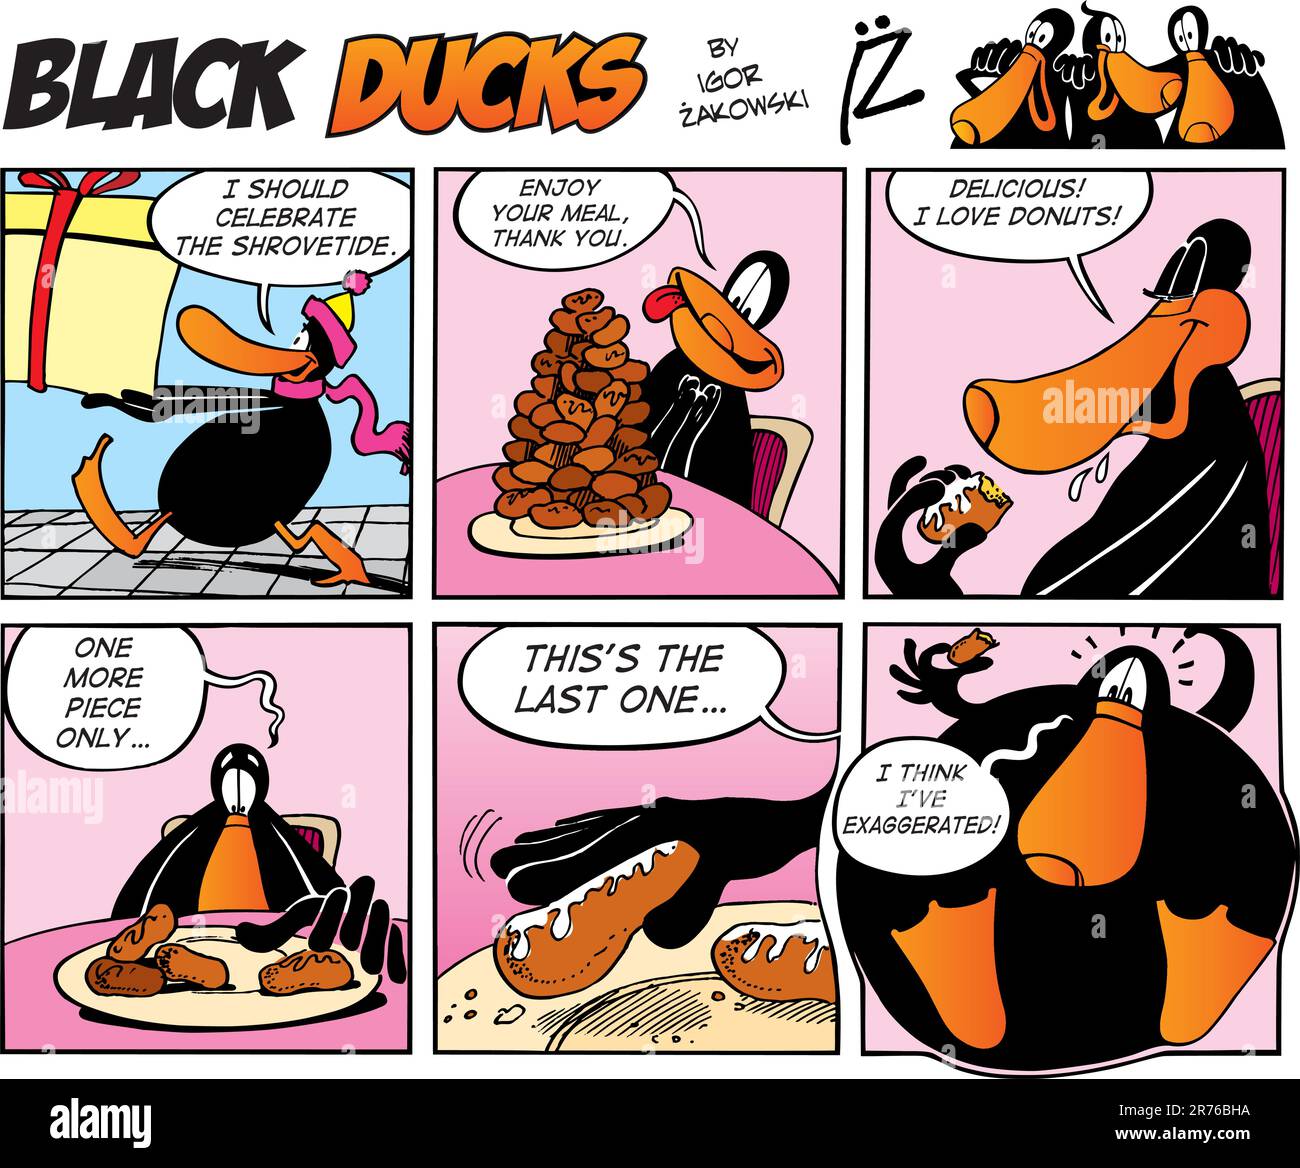 Black Ducks Comic Strip episode 40 Stock Vector